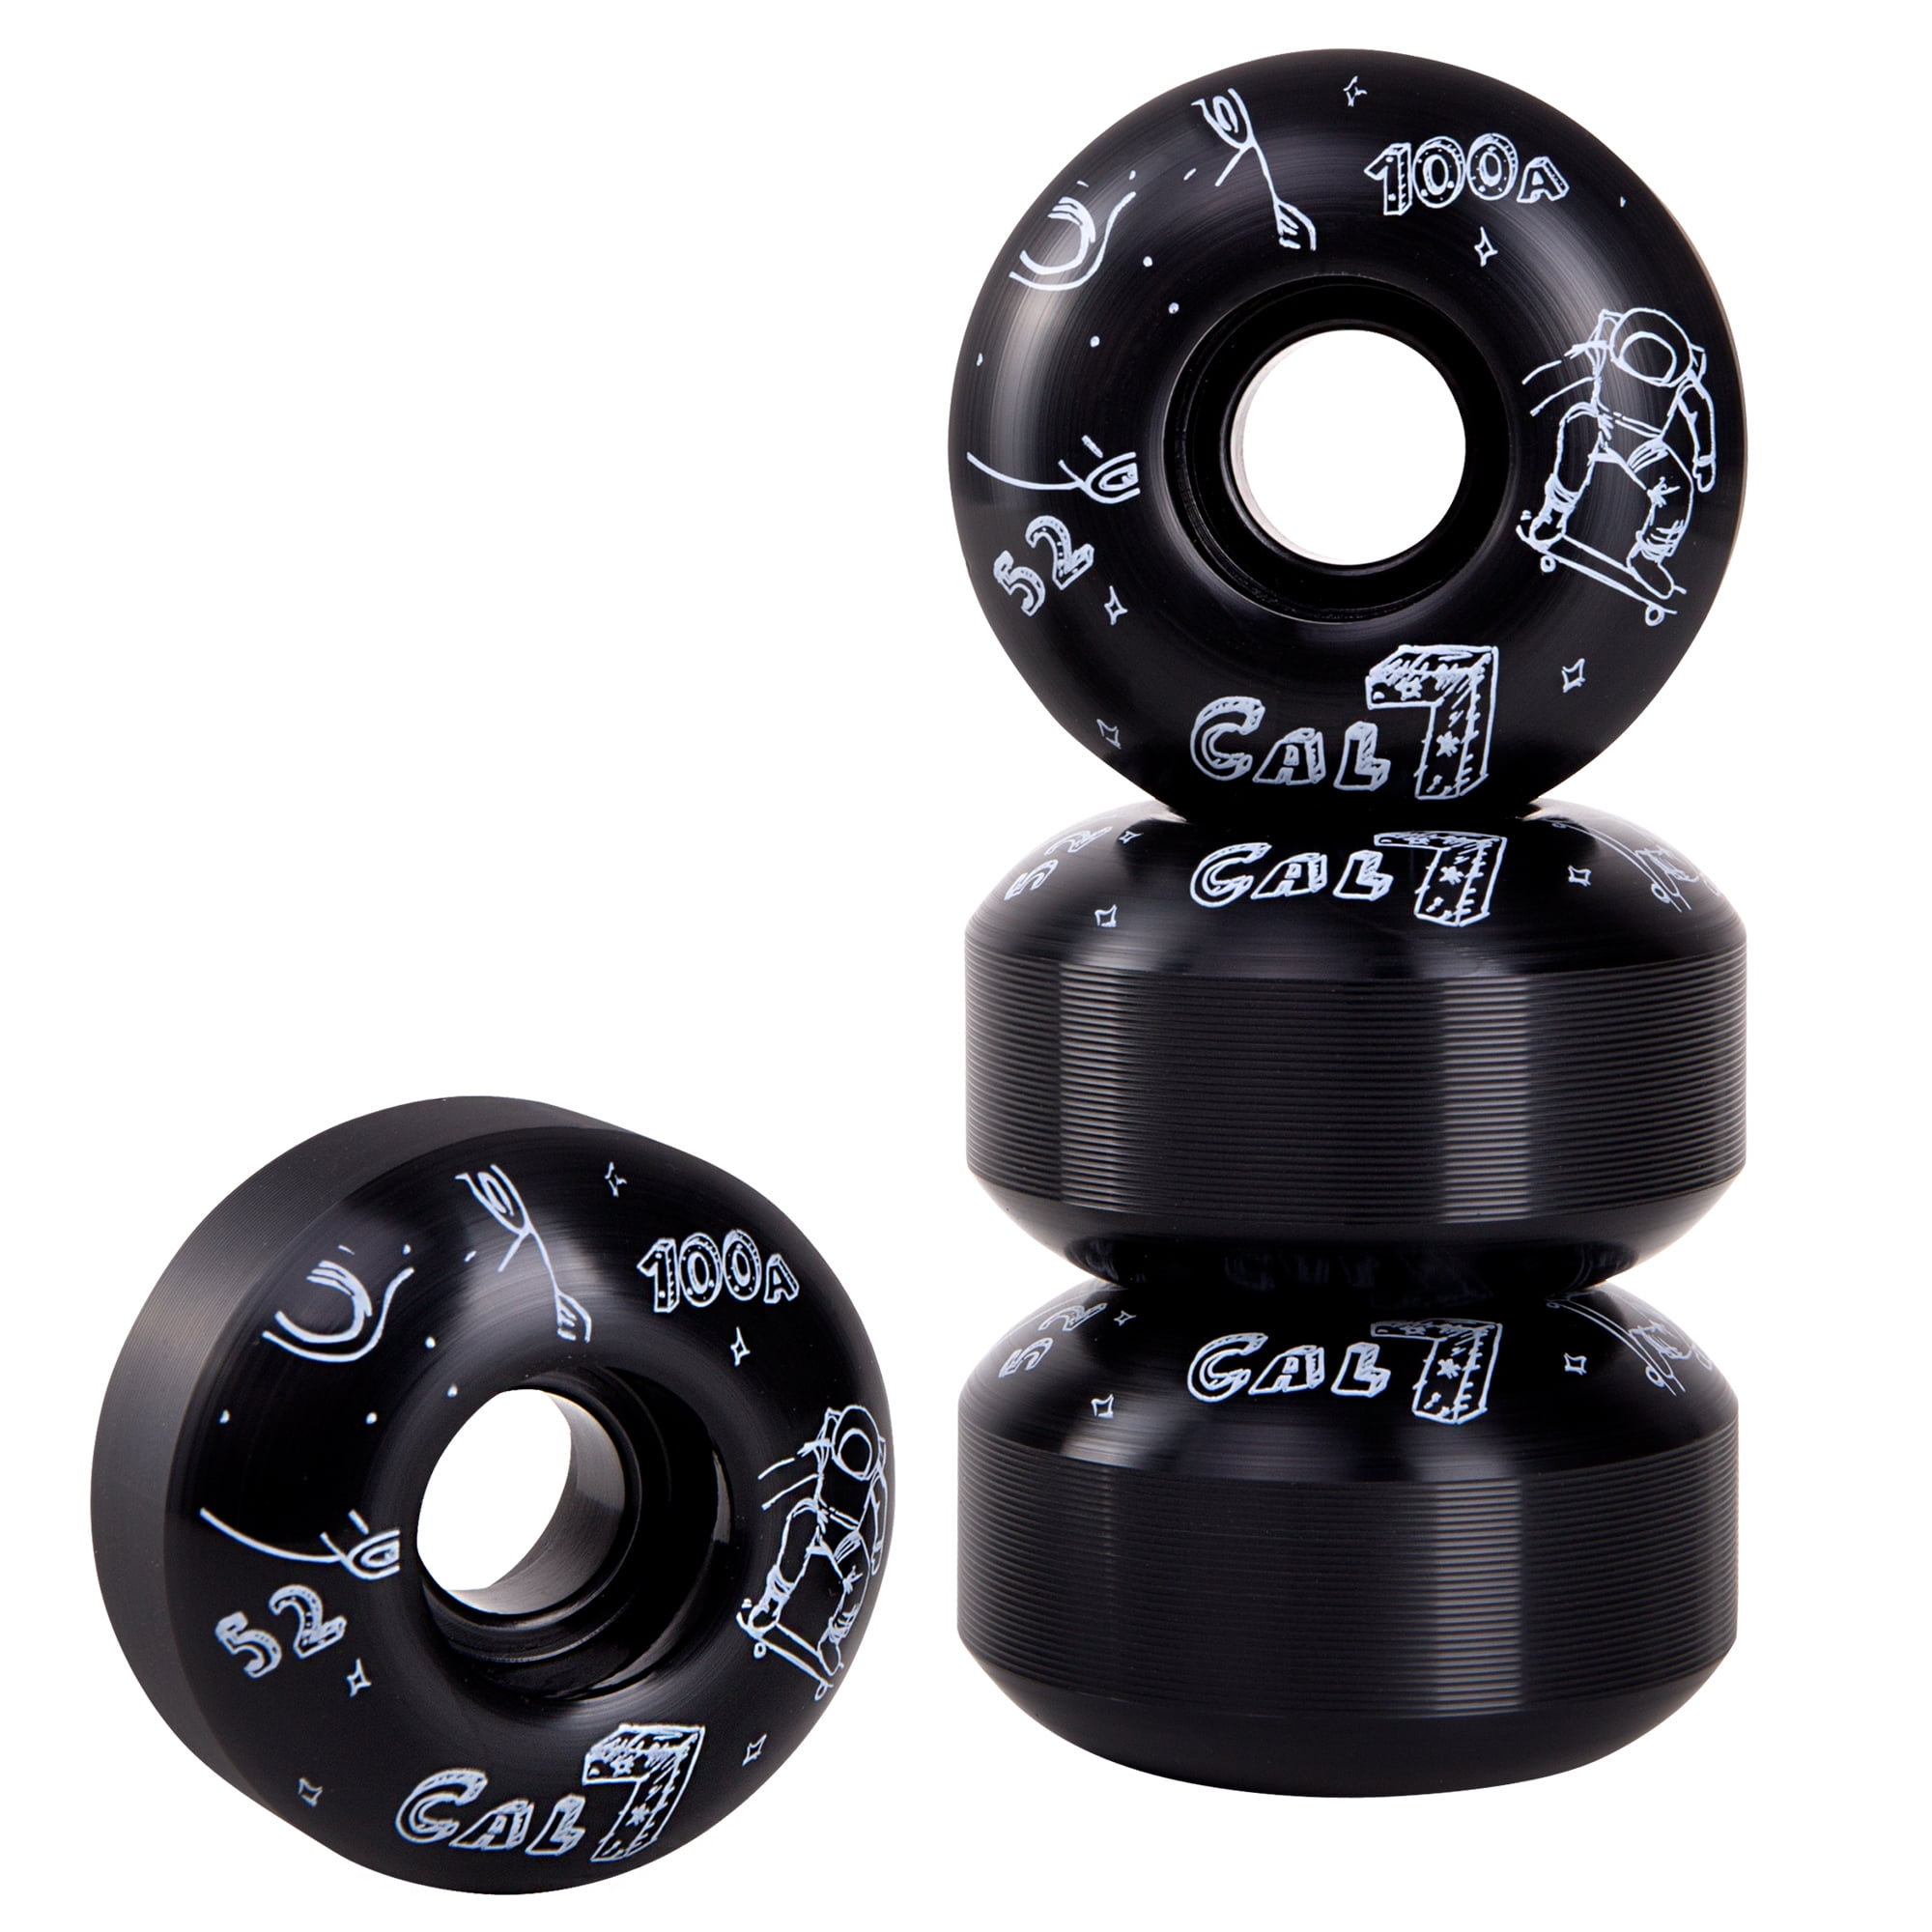 Blank Black White 51mm x 30mm Pro Skateboard Wheels Brand New